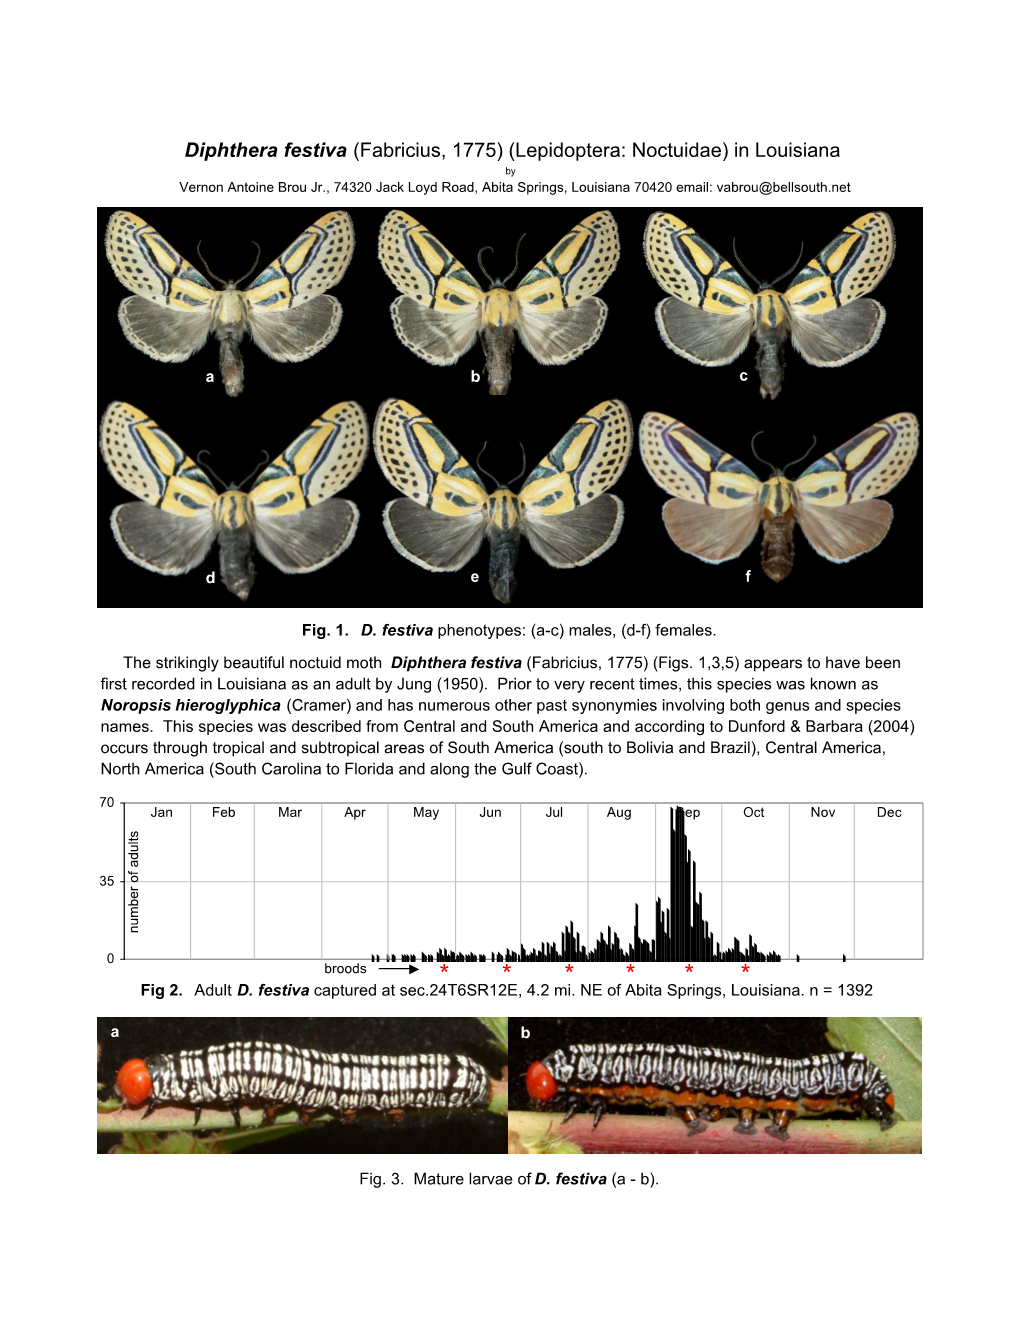 Lepidoptera: Noctuidae) in Louisiana by Vernon Antoine Brou Jr., 74320 Jack Loyd Road, Abita Springs, Louisiana 70420 Email: Vabrou@Bellsouth.Net